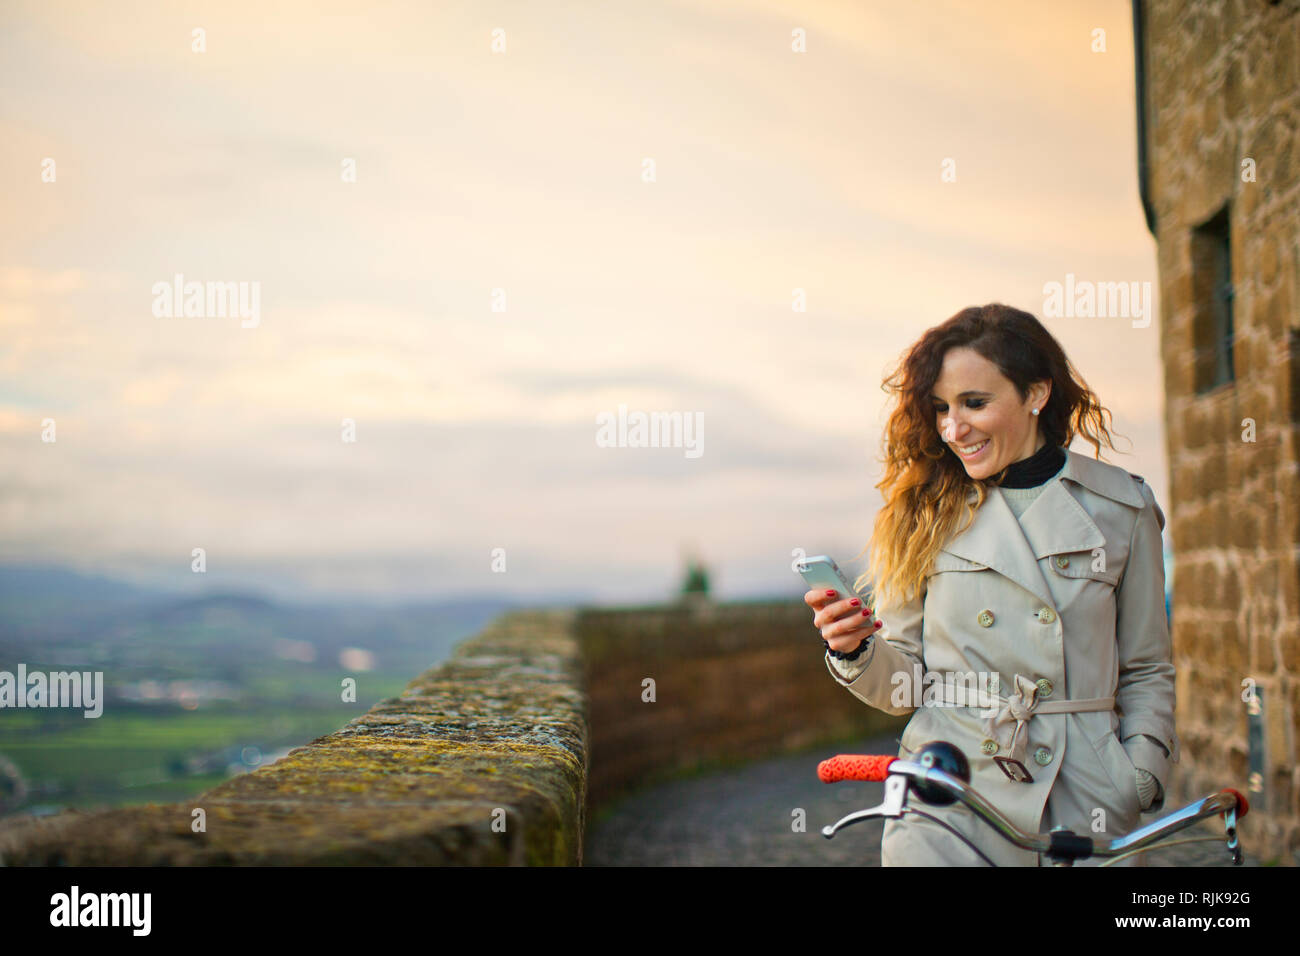 Junge Frau auf dem Fahrrad mit Ihrem Telefon. Stockfoto